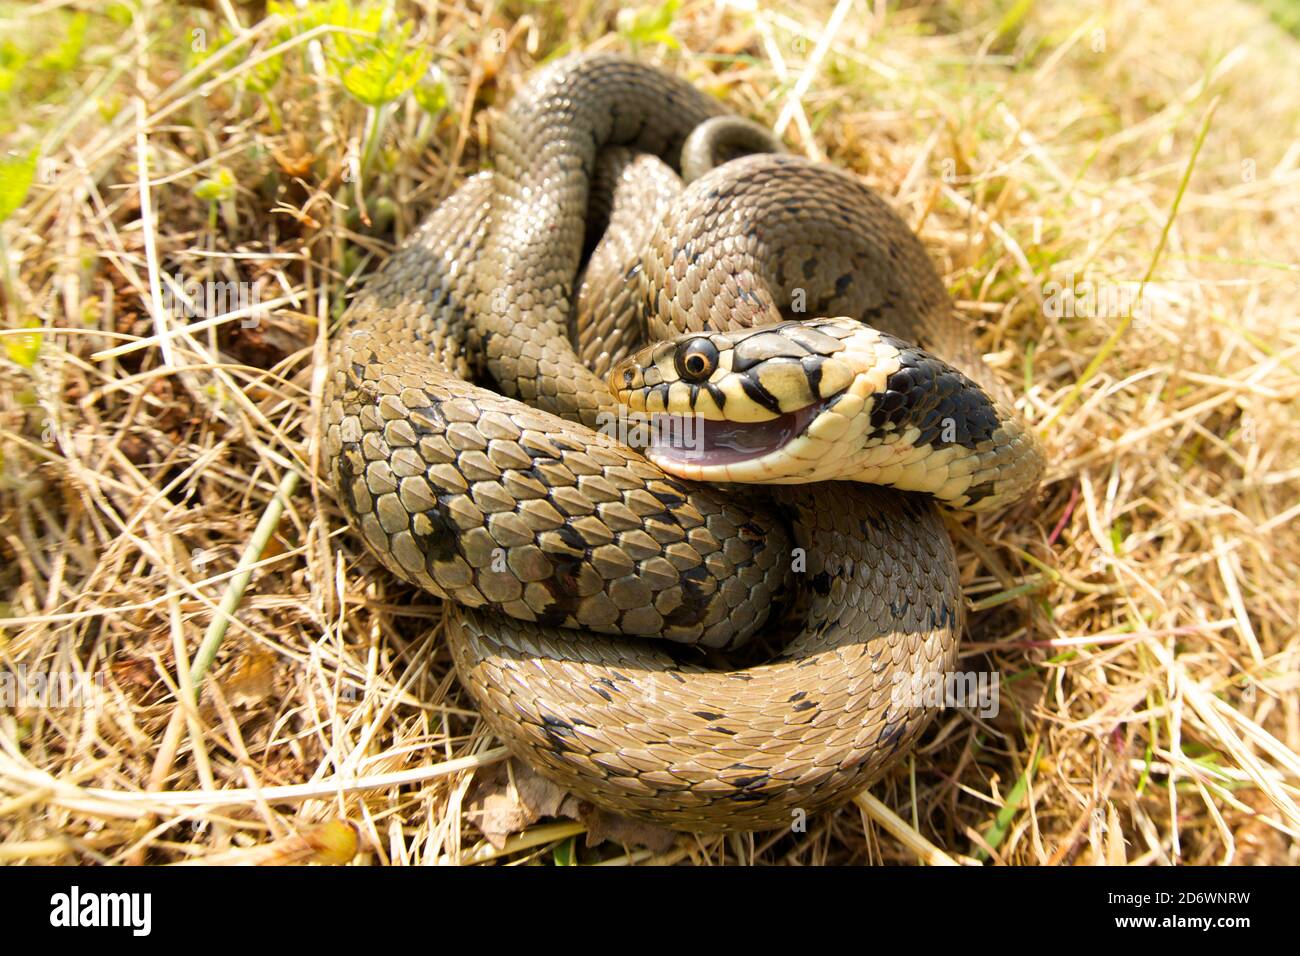 Grass snake playing possum/ feigning death, UK. Stock Photo